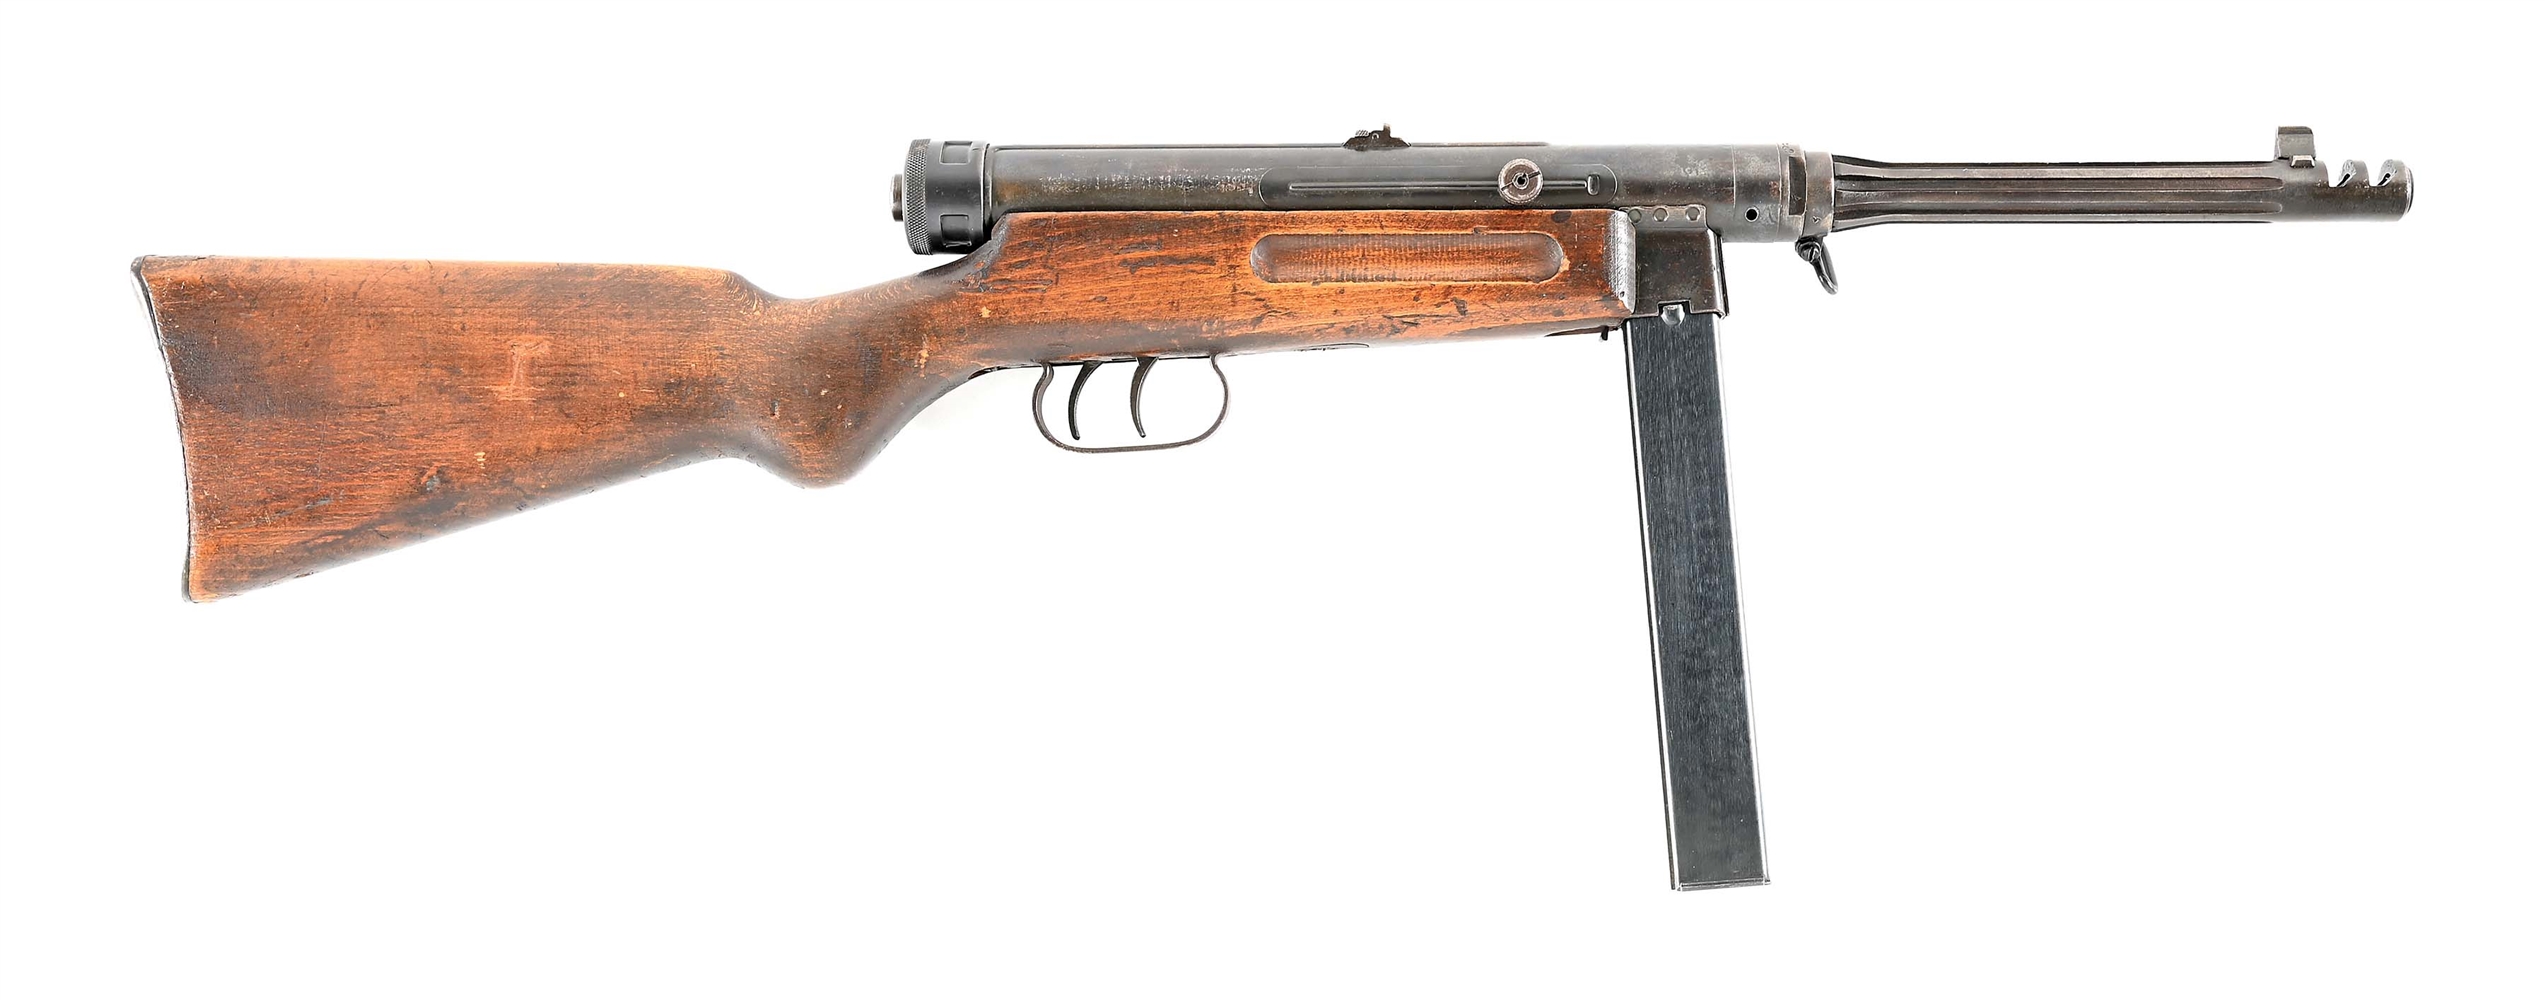 (N) ITALIAN WORLD WAR II BERETTA 38/42 SUBMACHINE GUN (CURIO & RELIC).